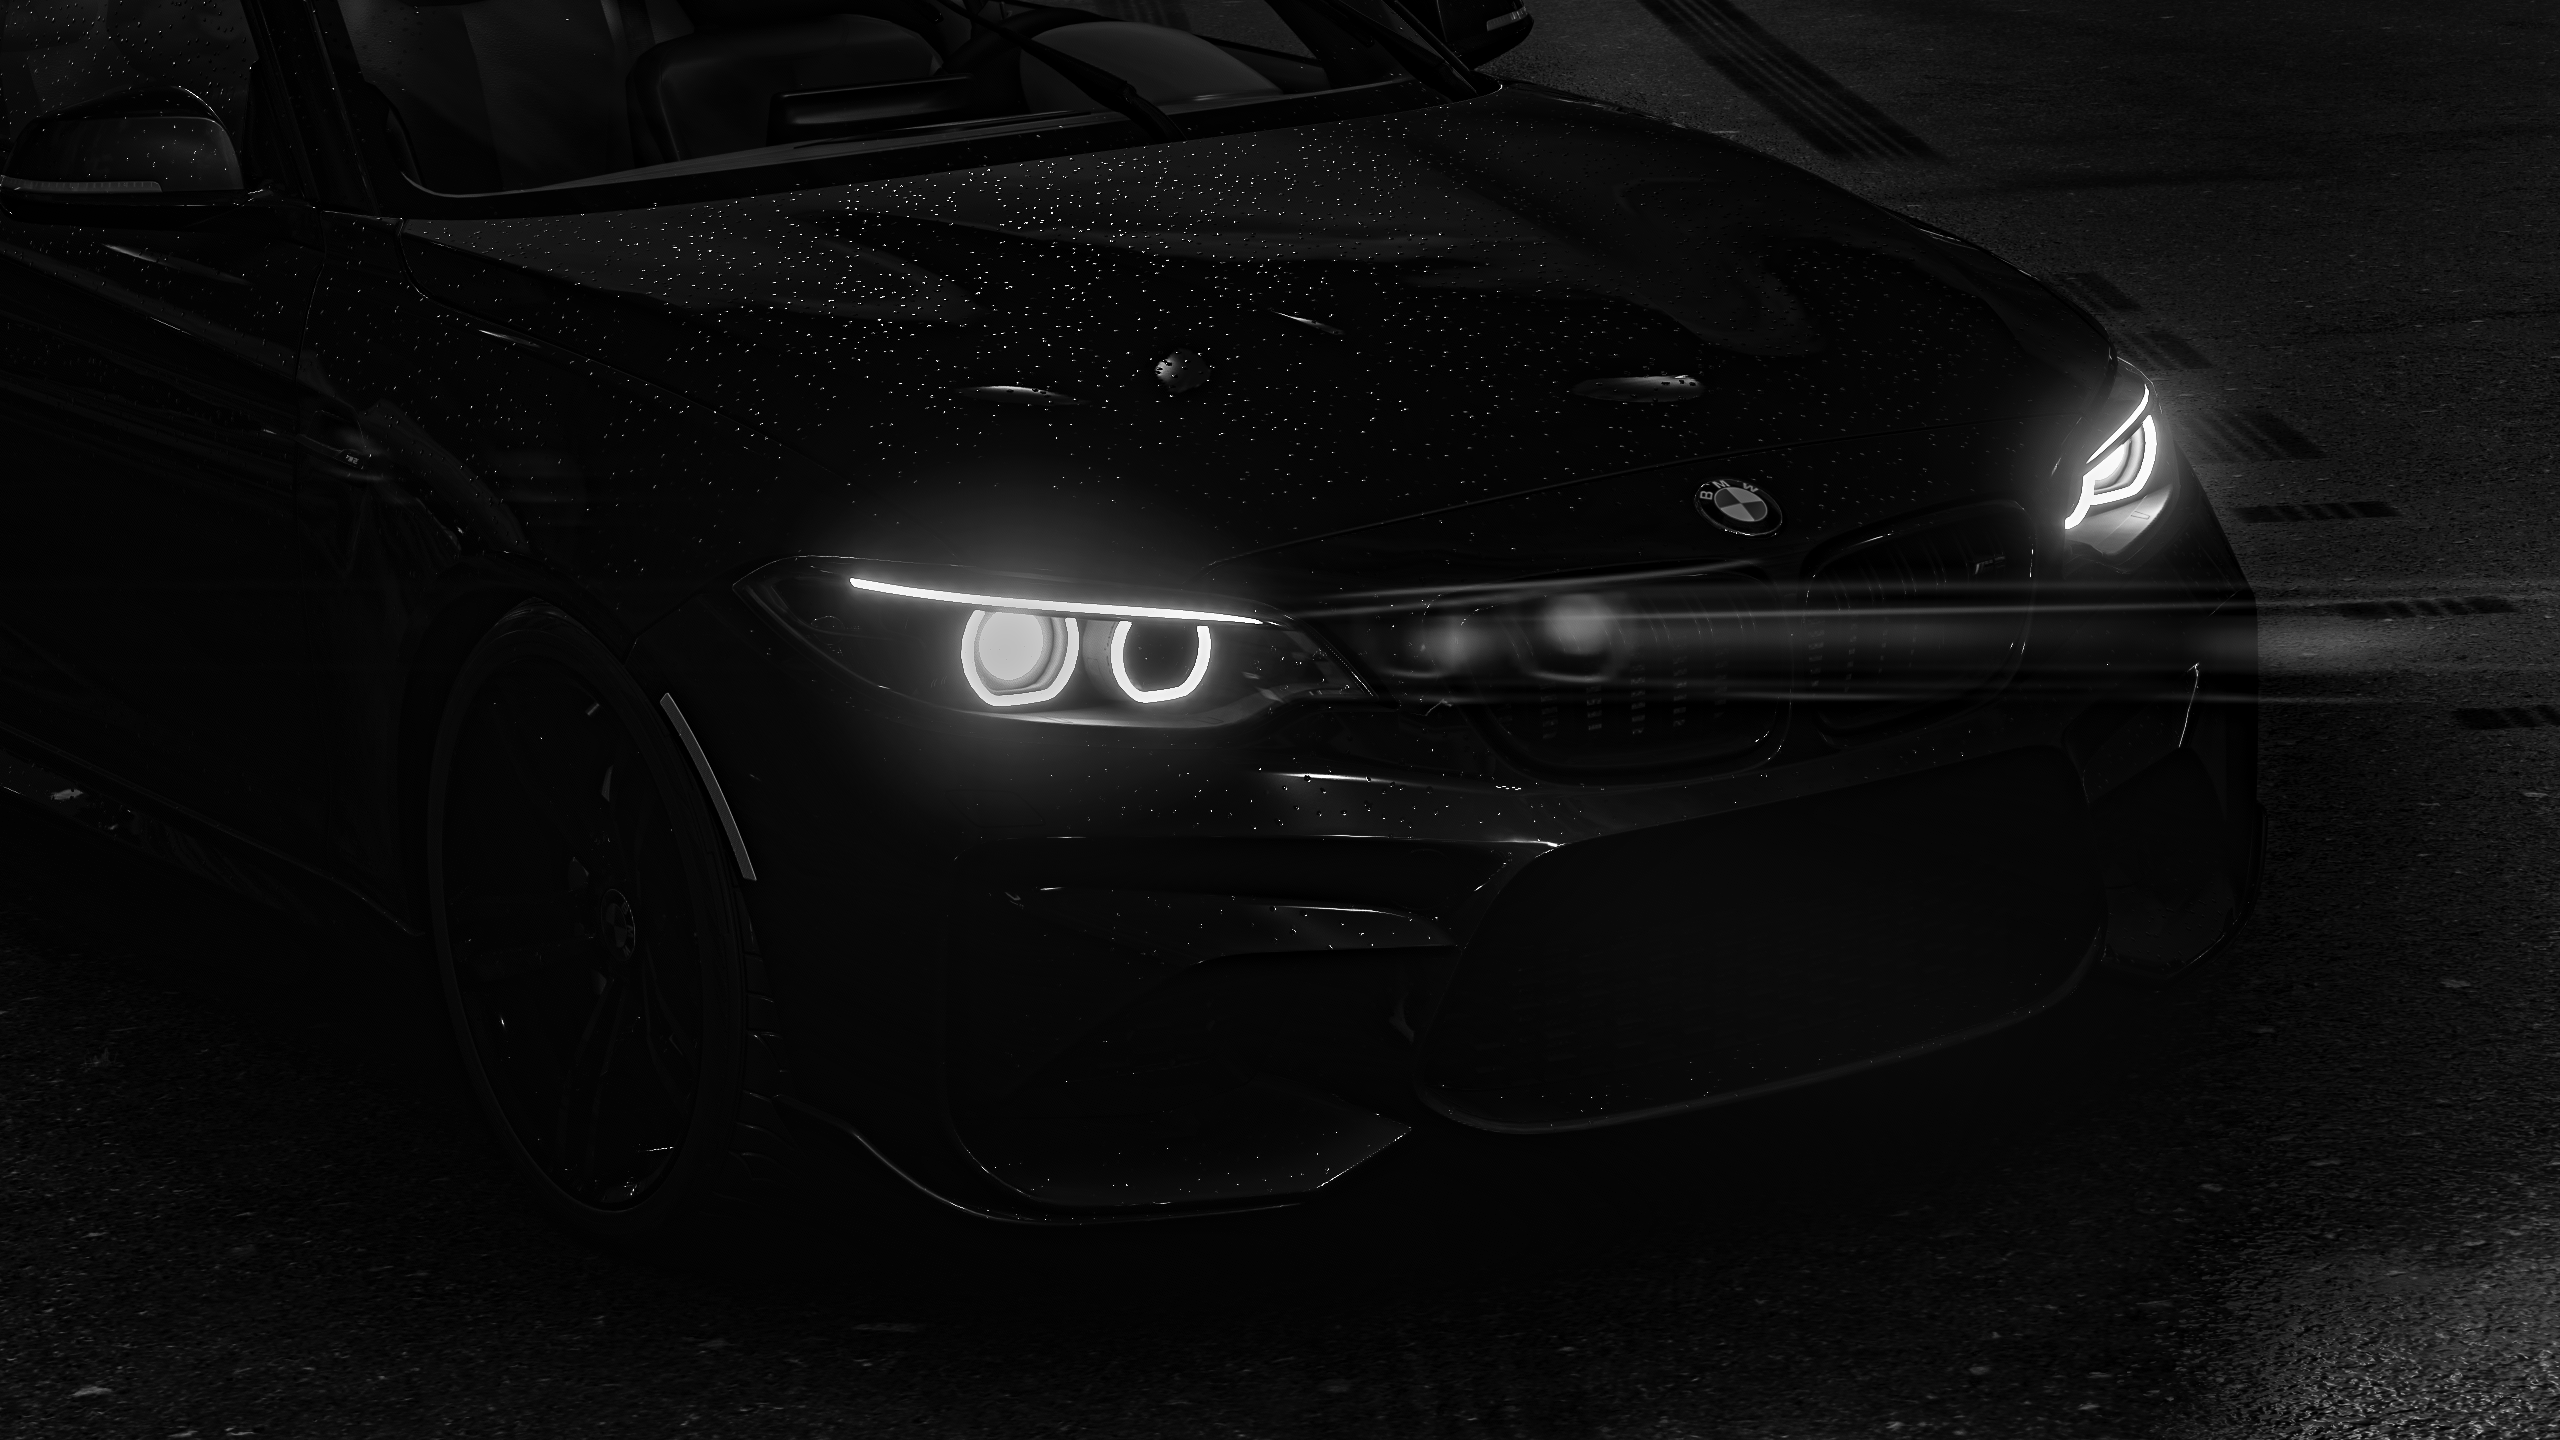 General 2560x1440 car dark BMW lights